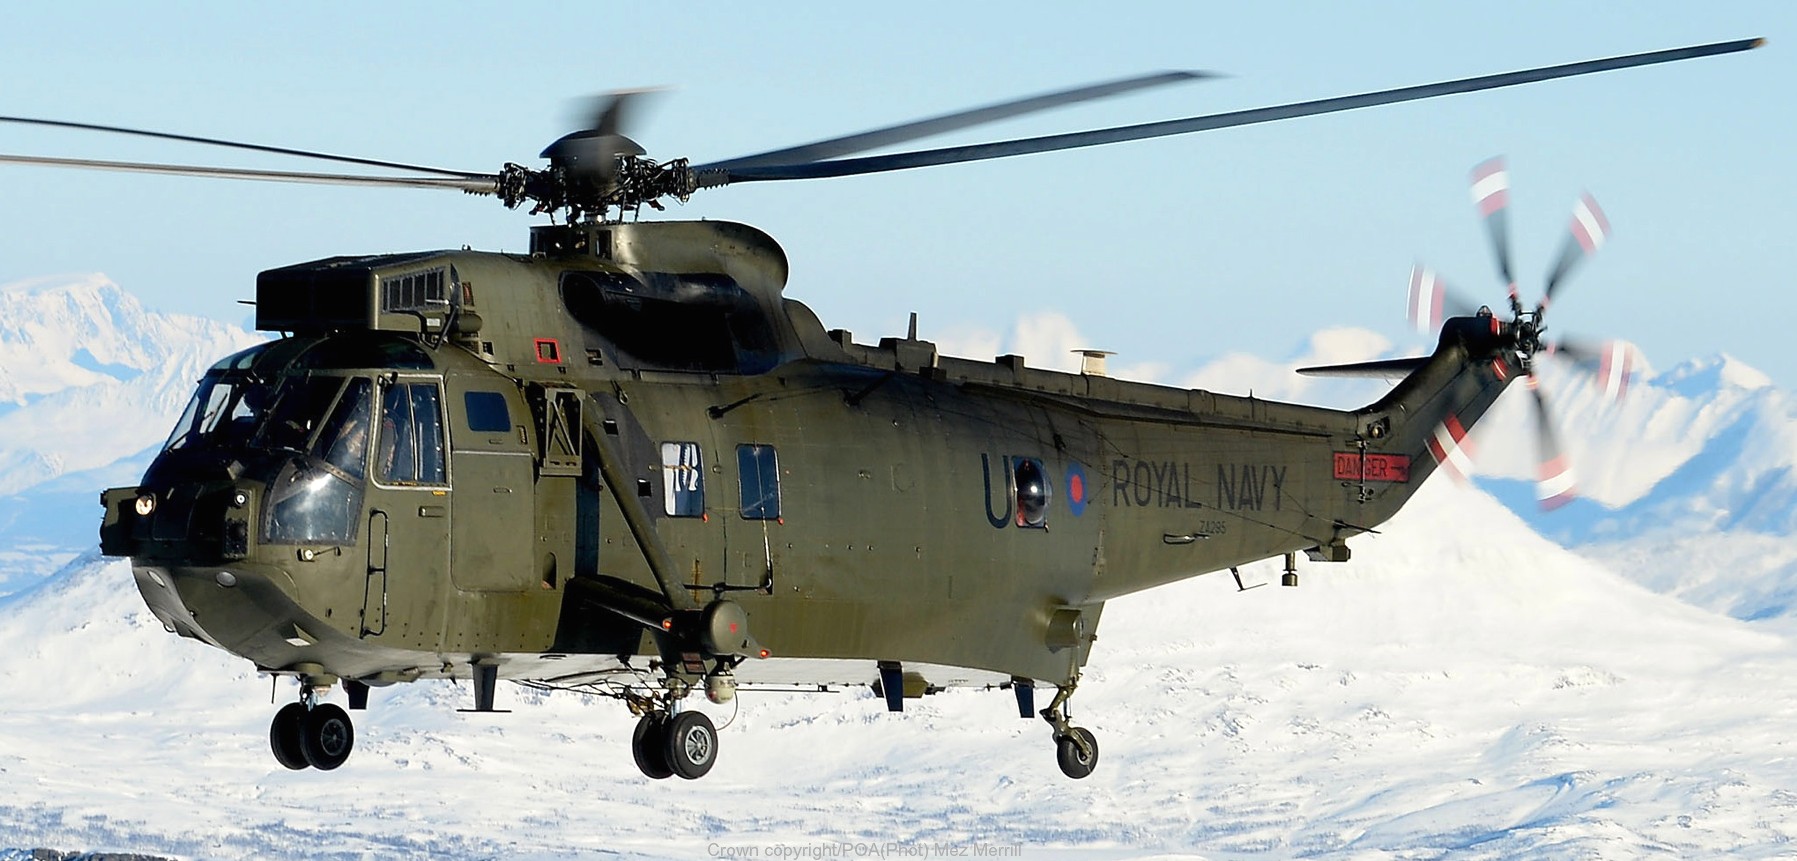 sea king hc.4 helicopter royal navy commando assault marines westland nas squadron rnas 04